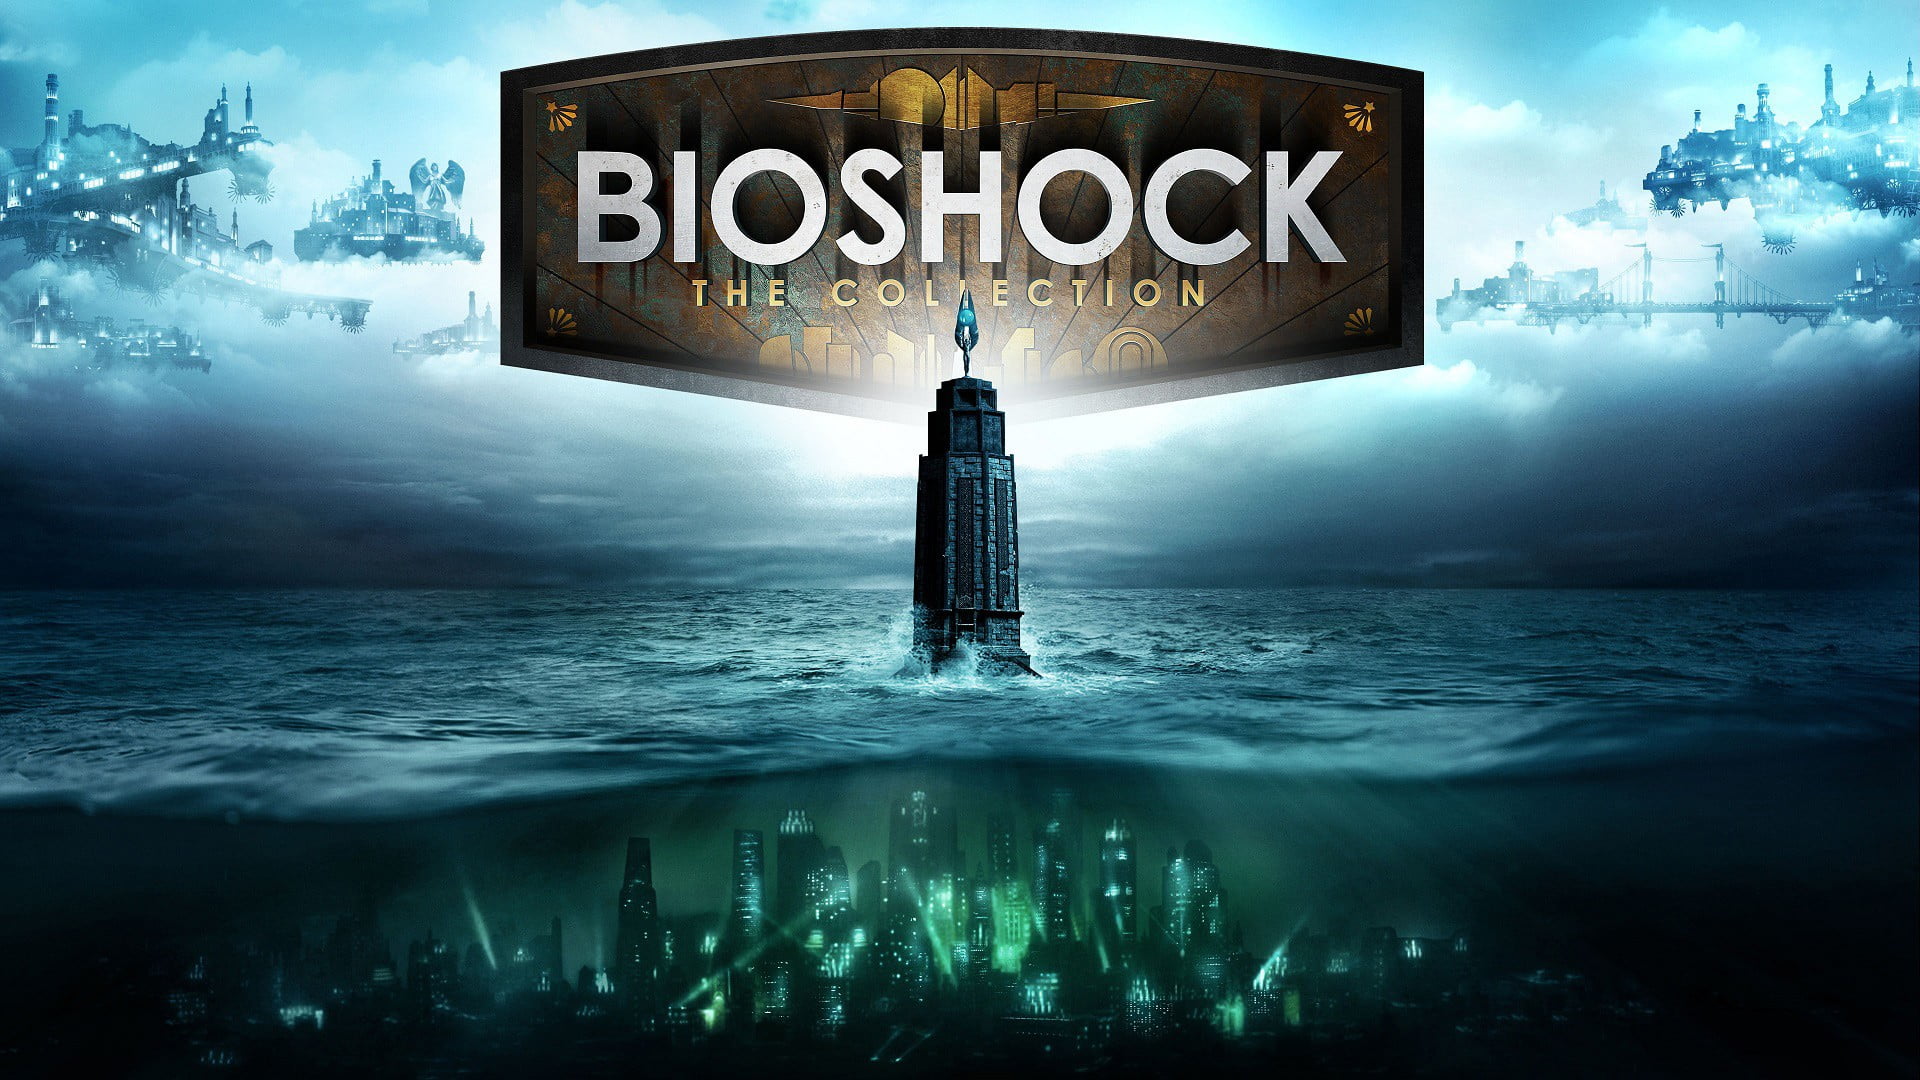 Bioshock the collection digital wallpaer